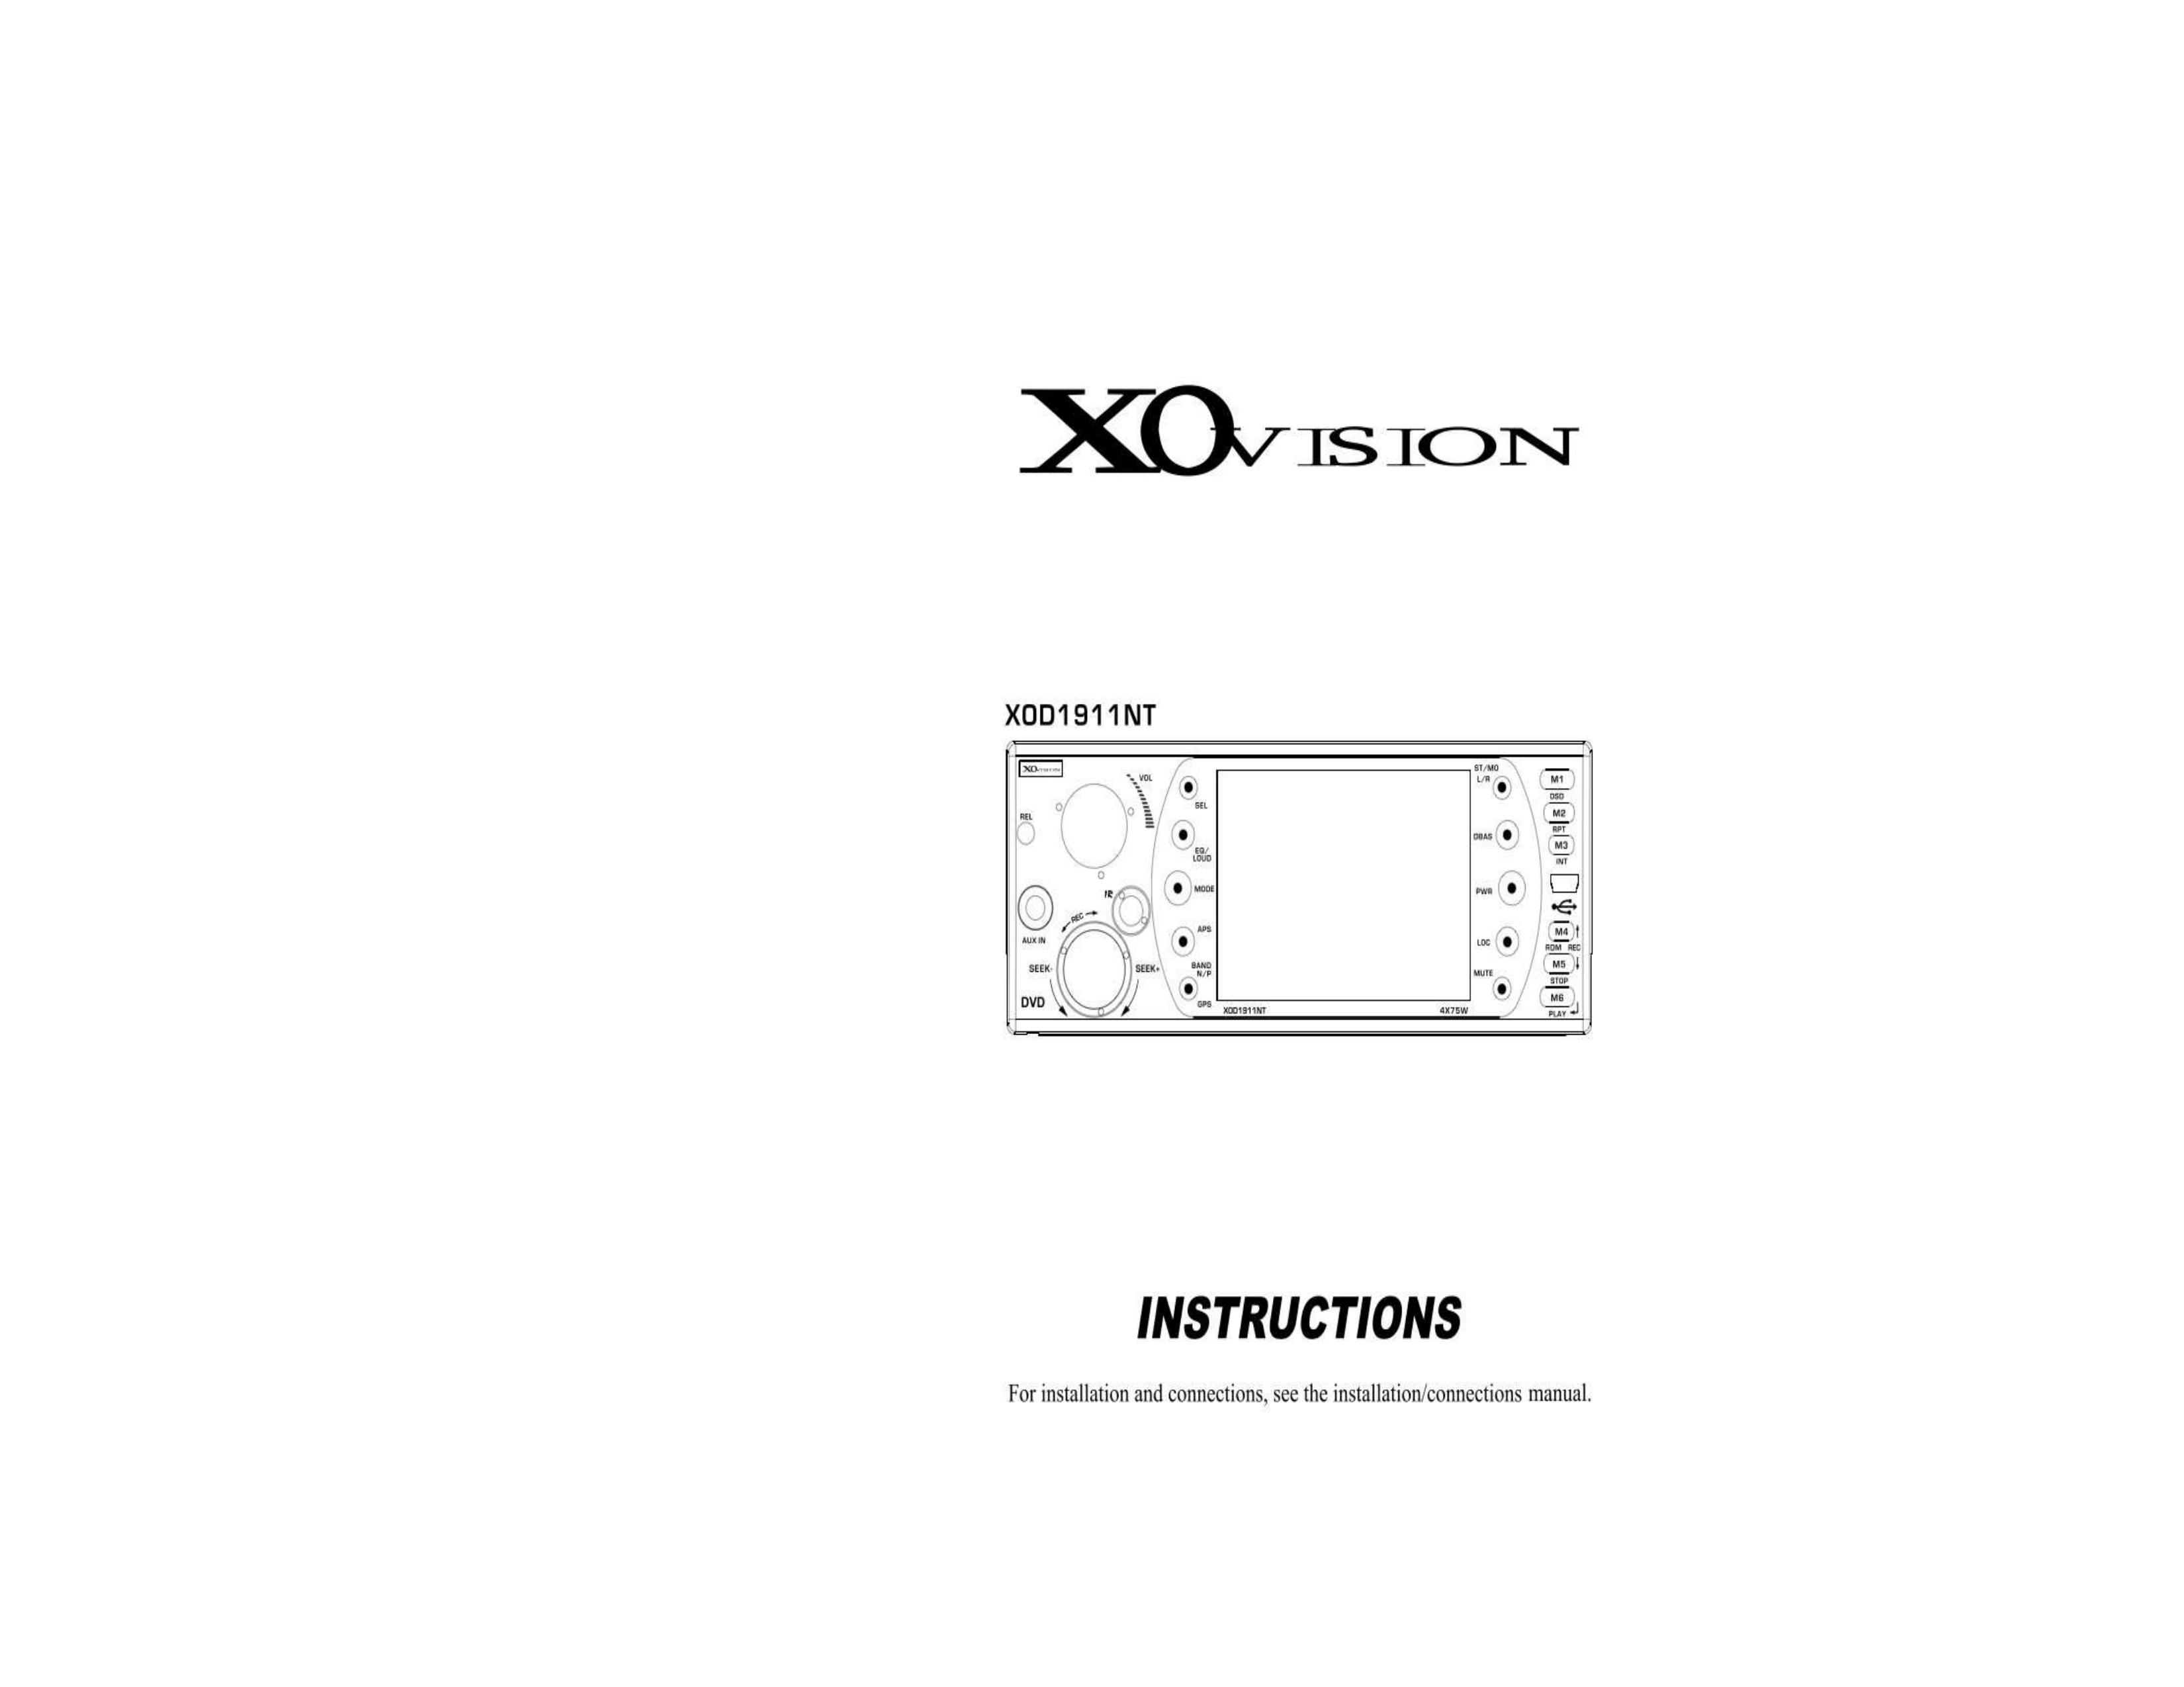 XO Vision X00191NT Gas Grill User Manual